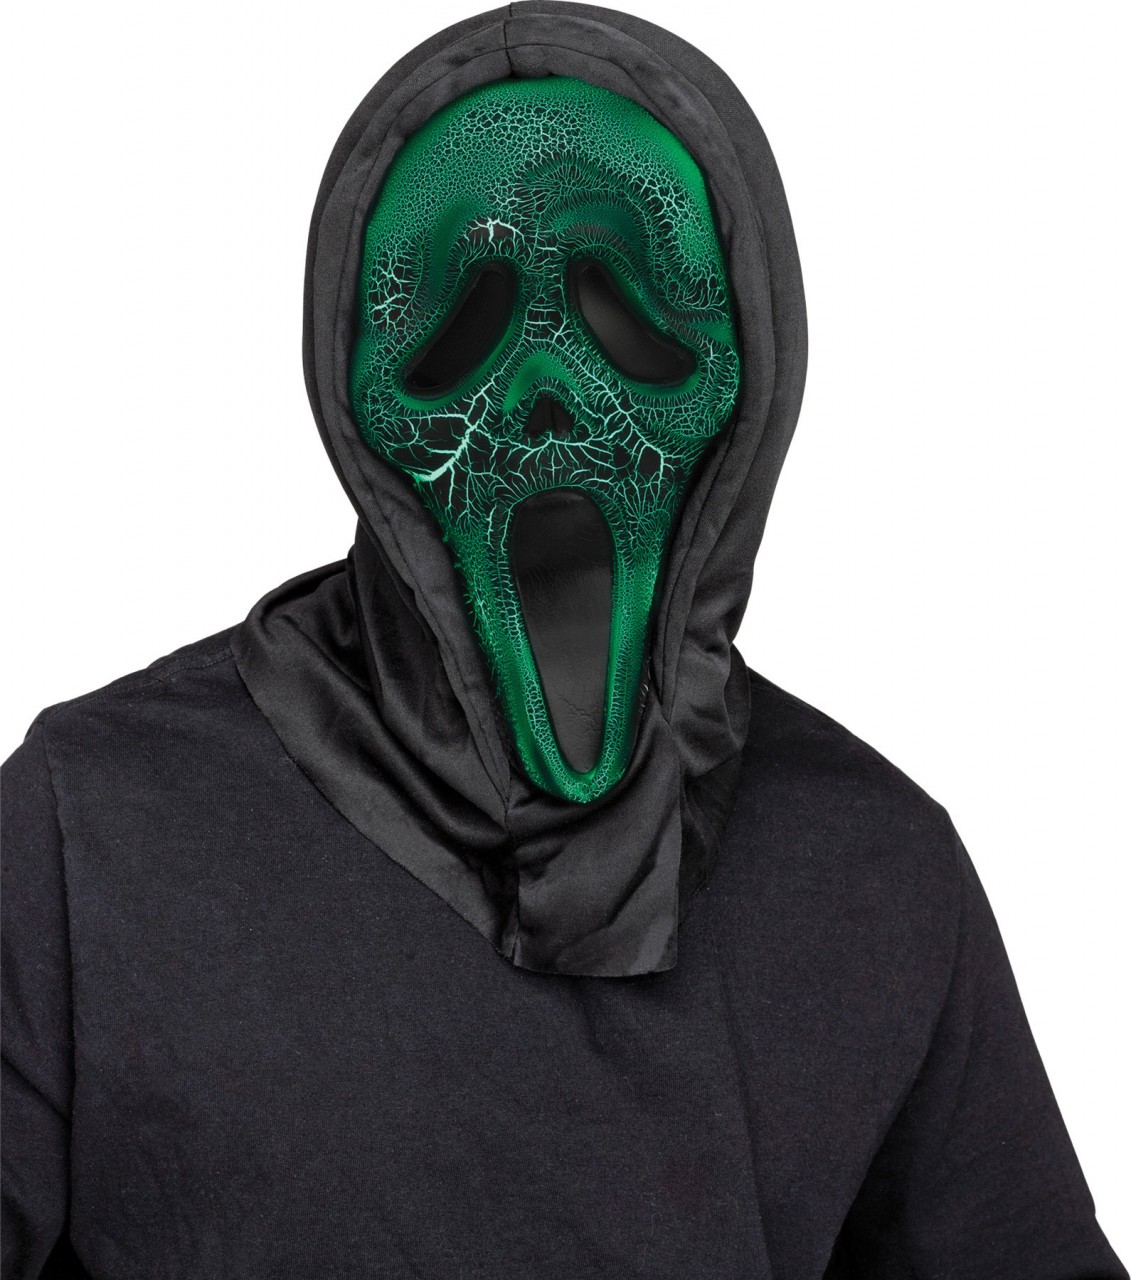 Smoldering Ghostface Mask - Scream